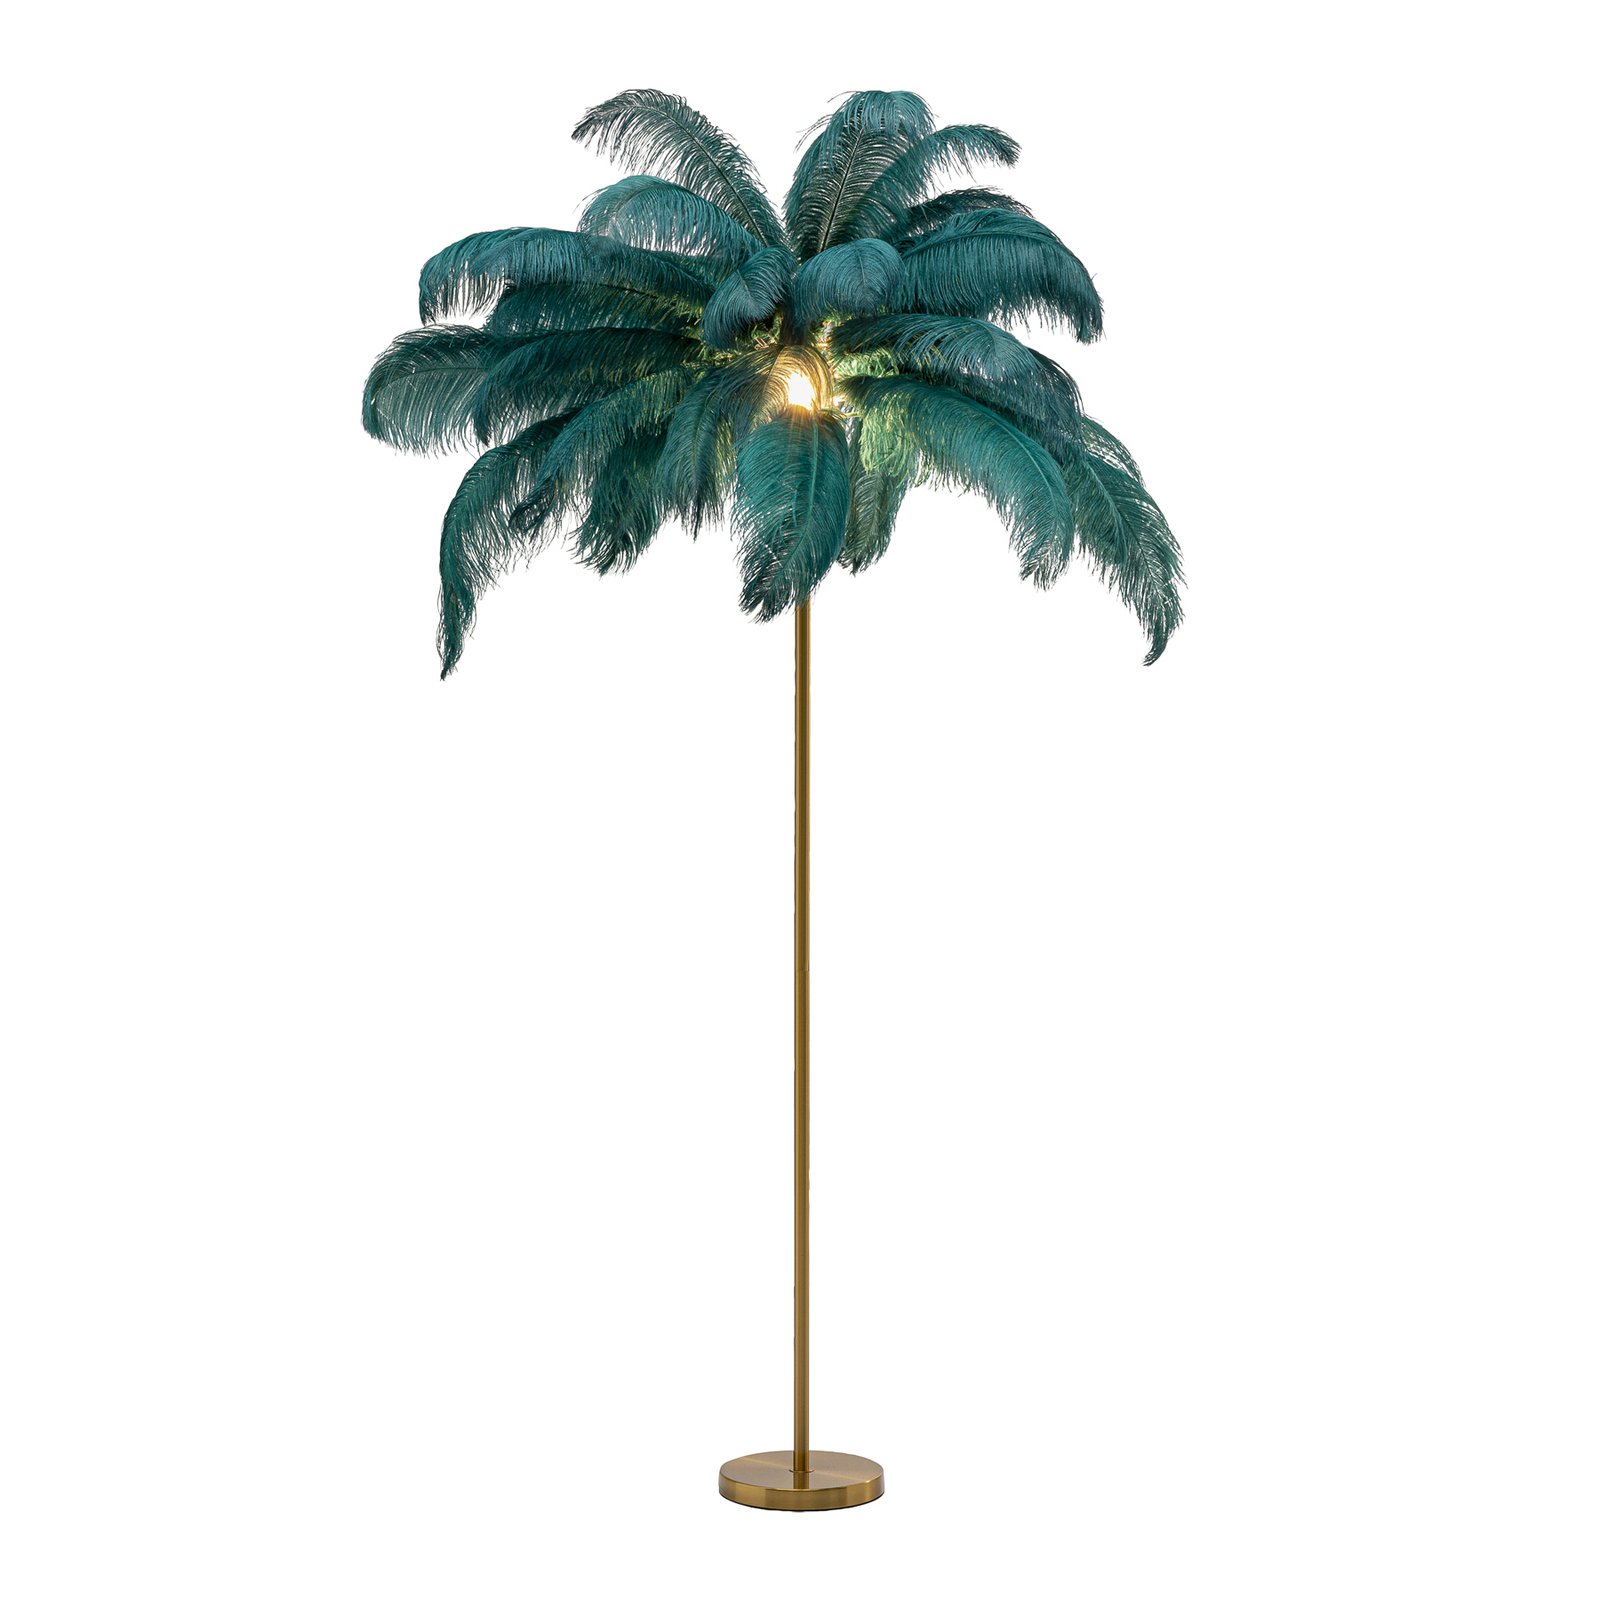 KARE Feather Palm lampe sur pied plumes, verte